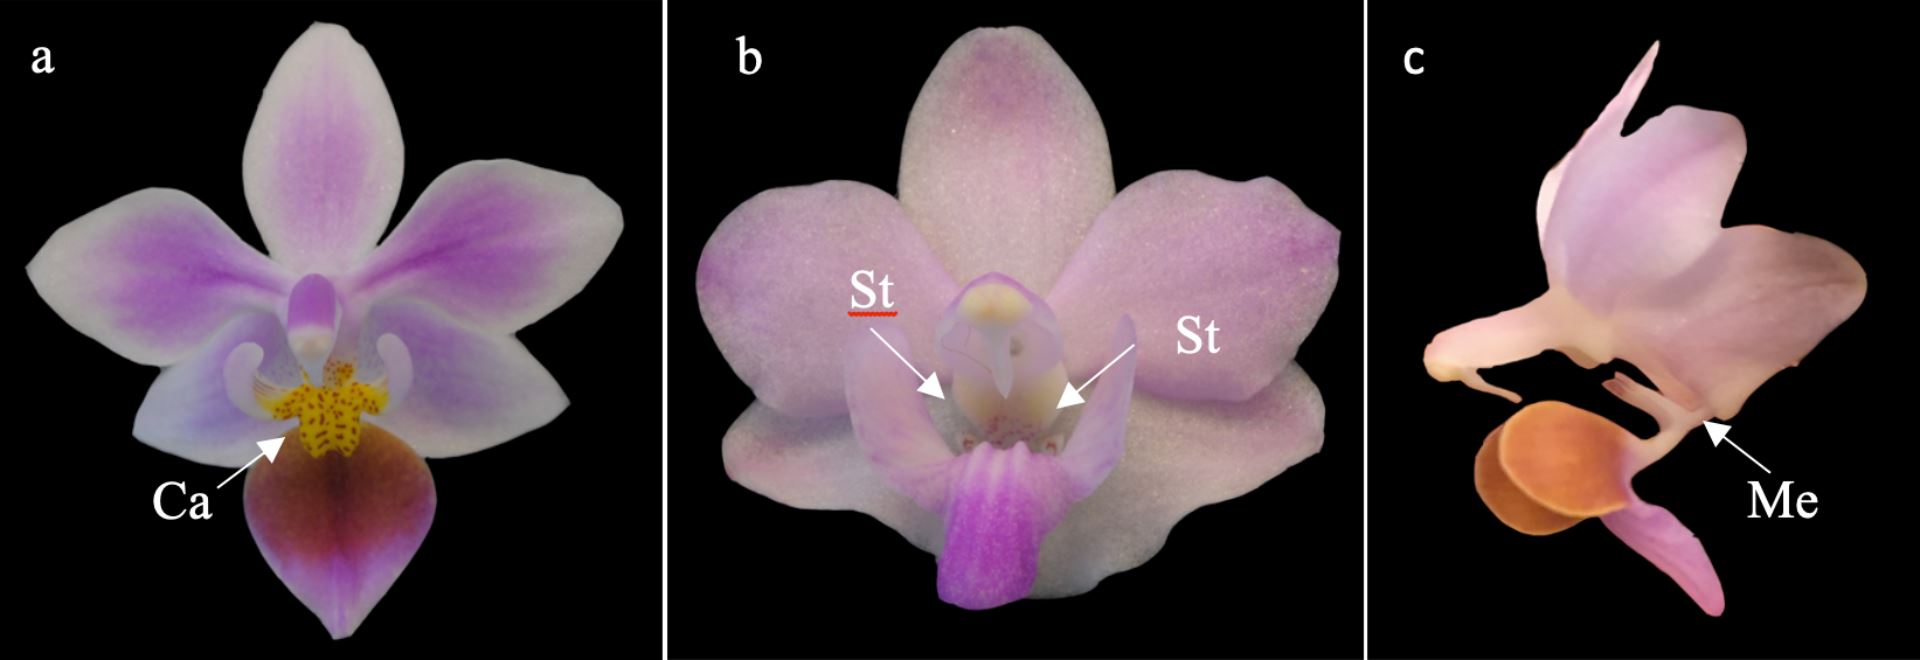 Bloemen van twee verschillende vlinderorchideënsoorten. a. Phalaenopsis equestris; b-c. Phalaenopsis pulcherima; Afkortingen: Ca=callus; Me=mentum; St=stelidia (Bron: Dewi Pramanik)